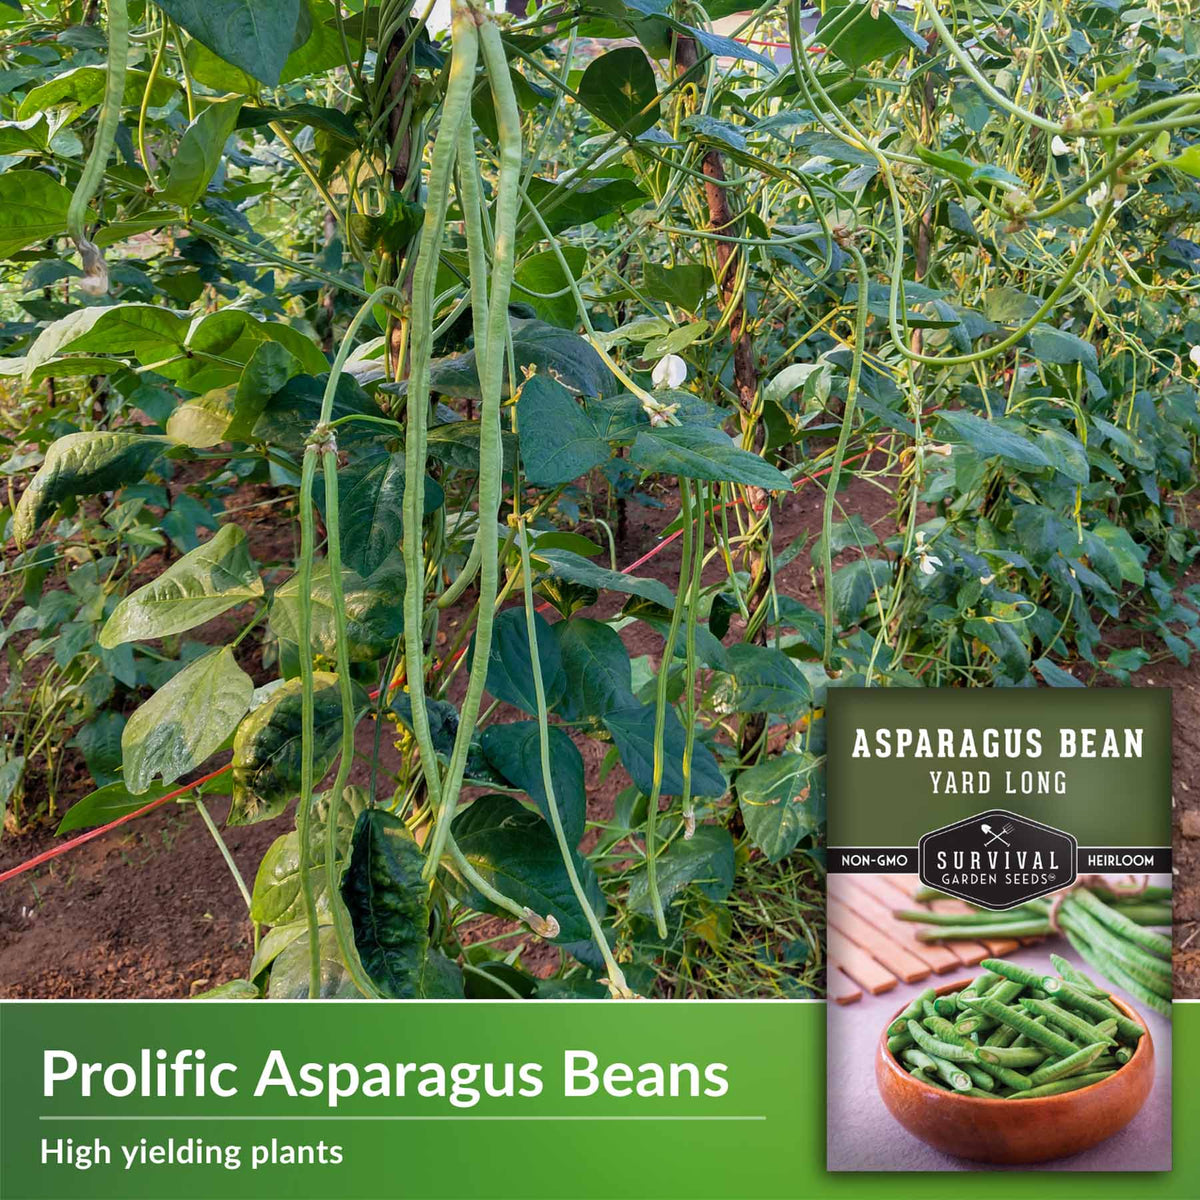 Prolific asparagus beans